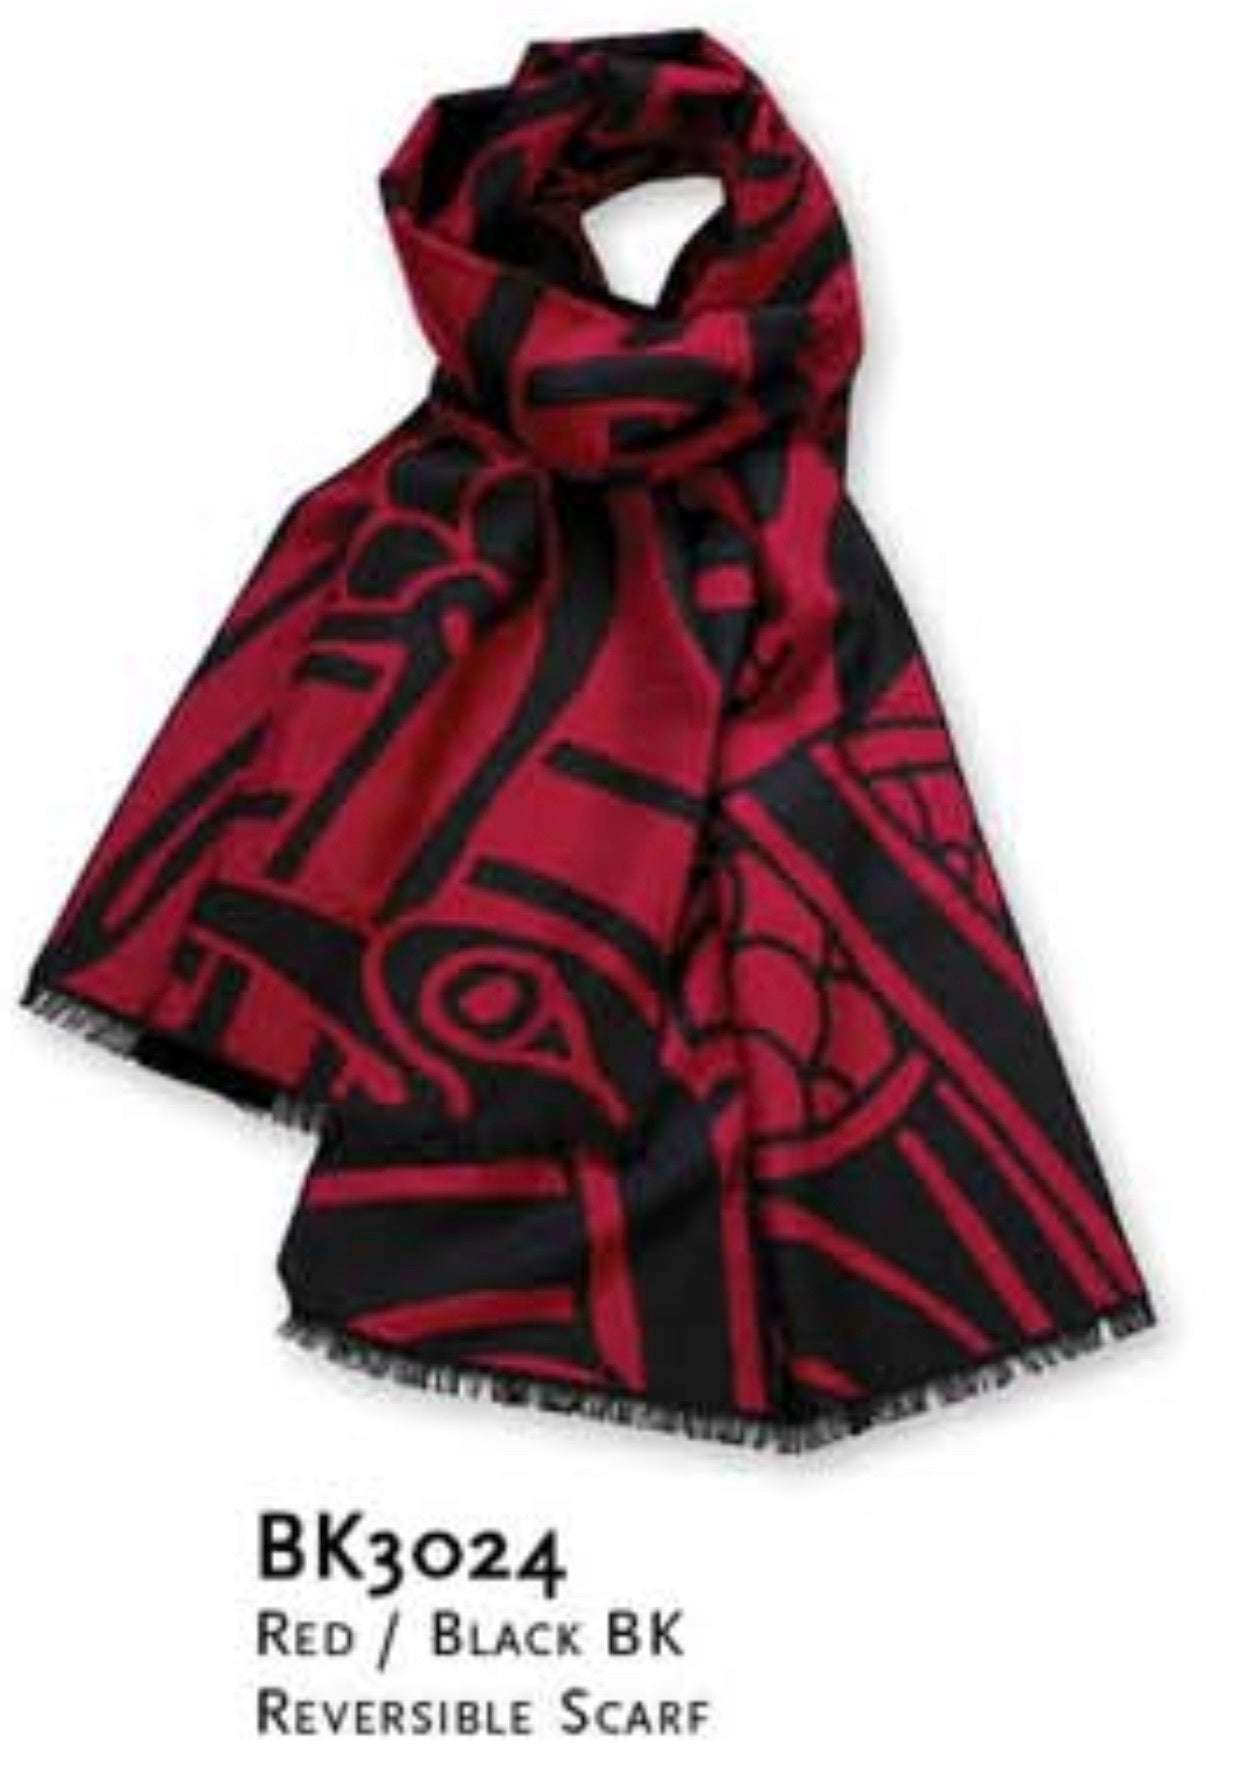 Red/black celtic reversible scarf bk3024